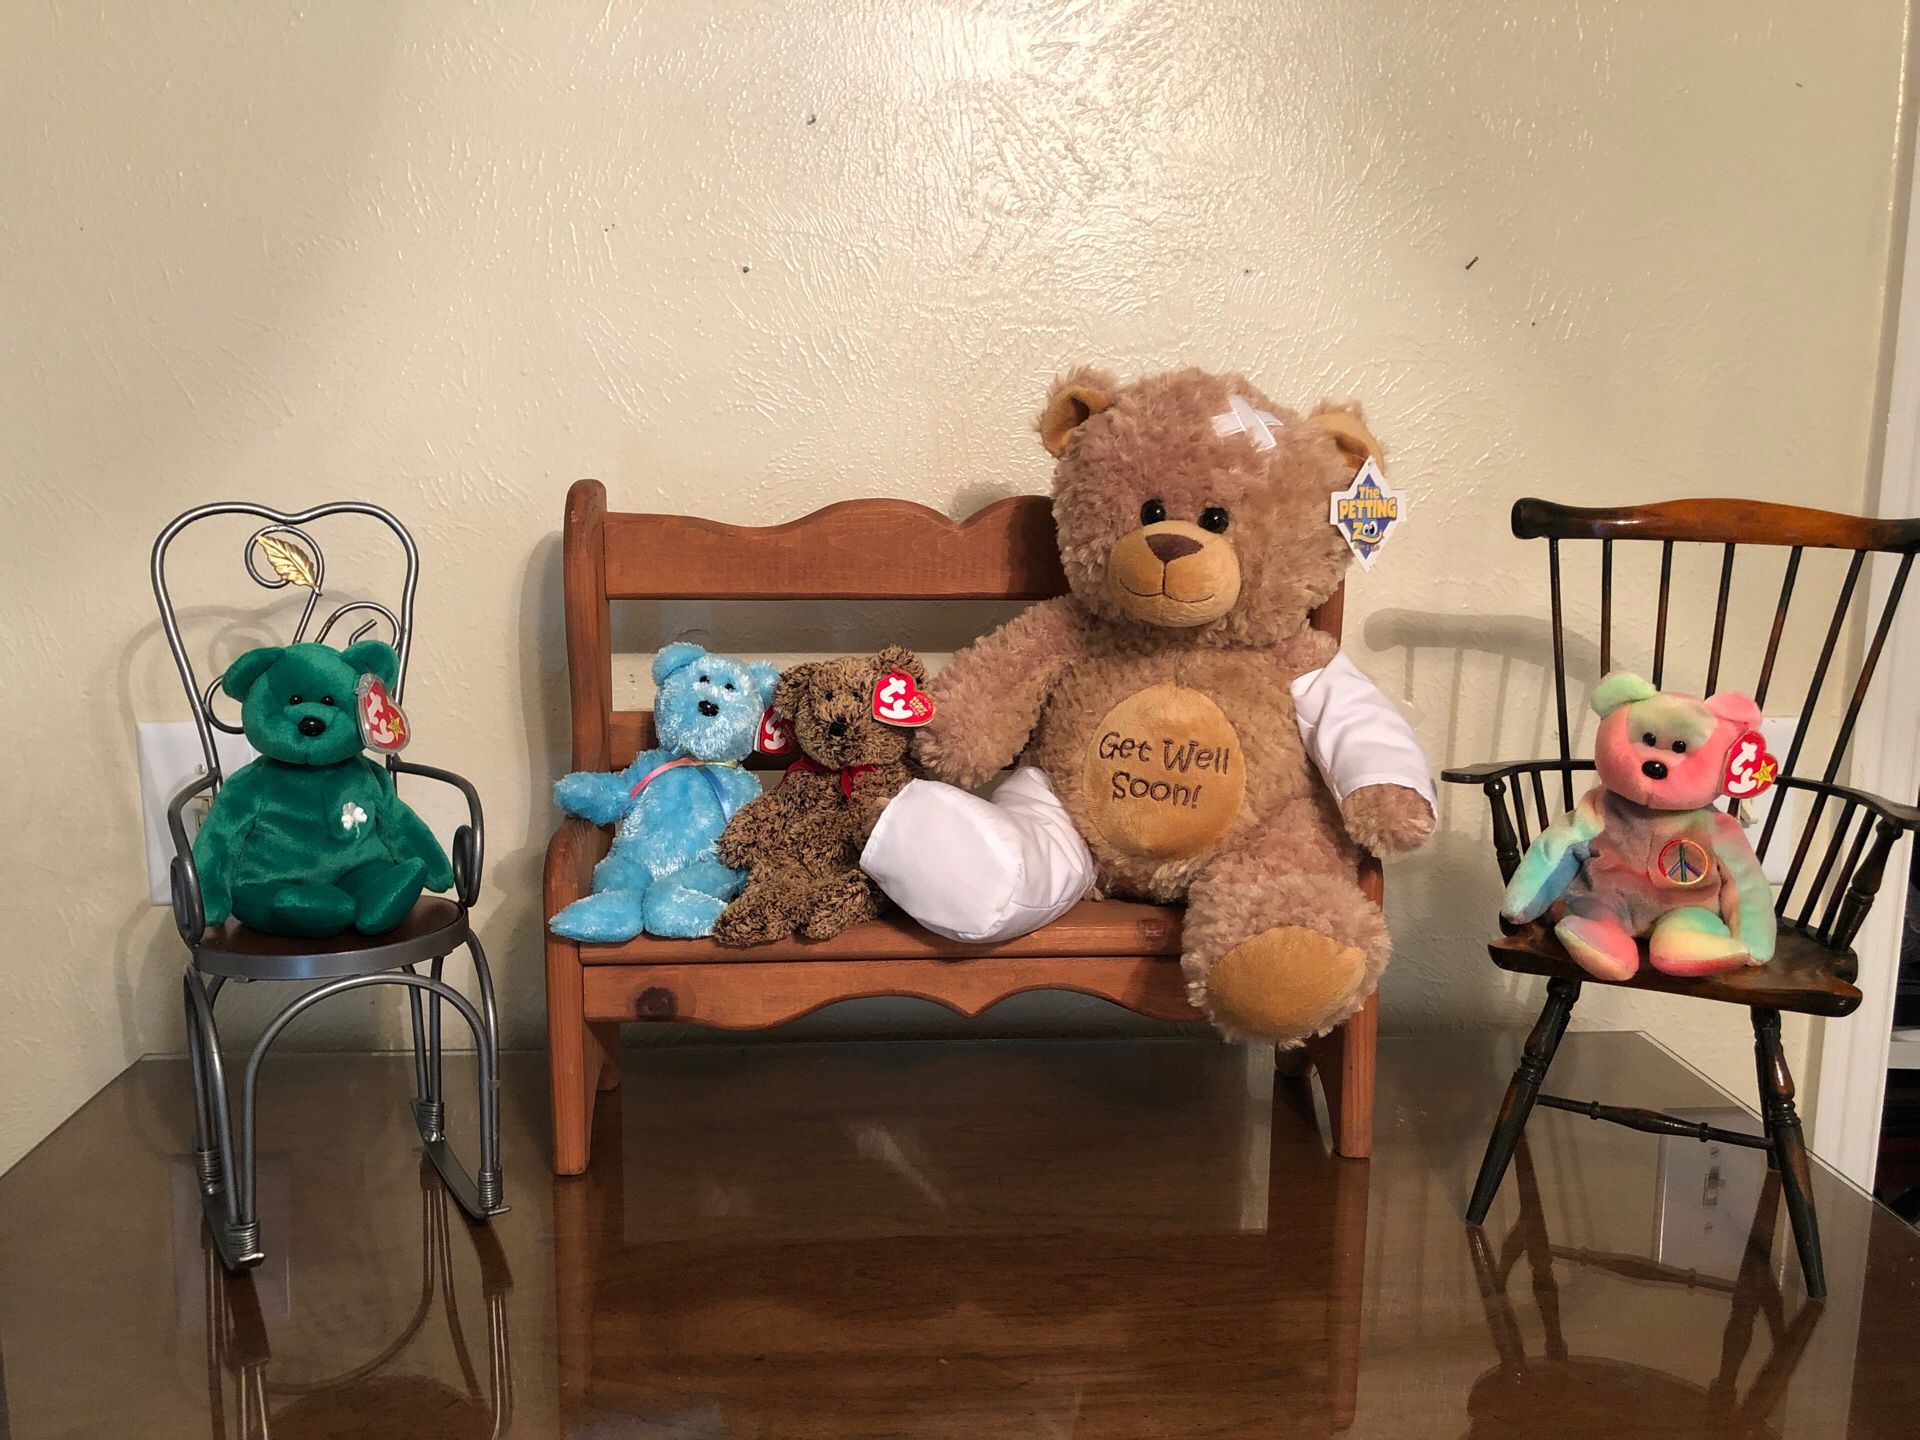 Precious teddy bears and furniture